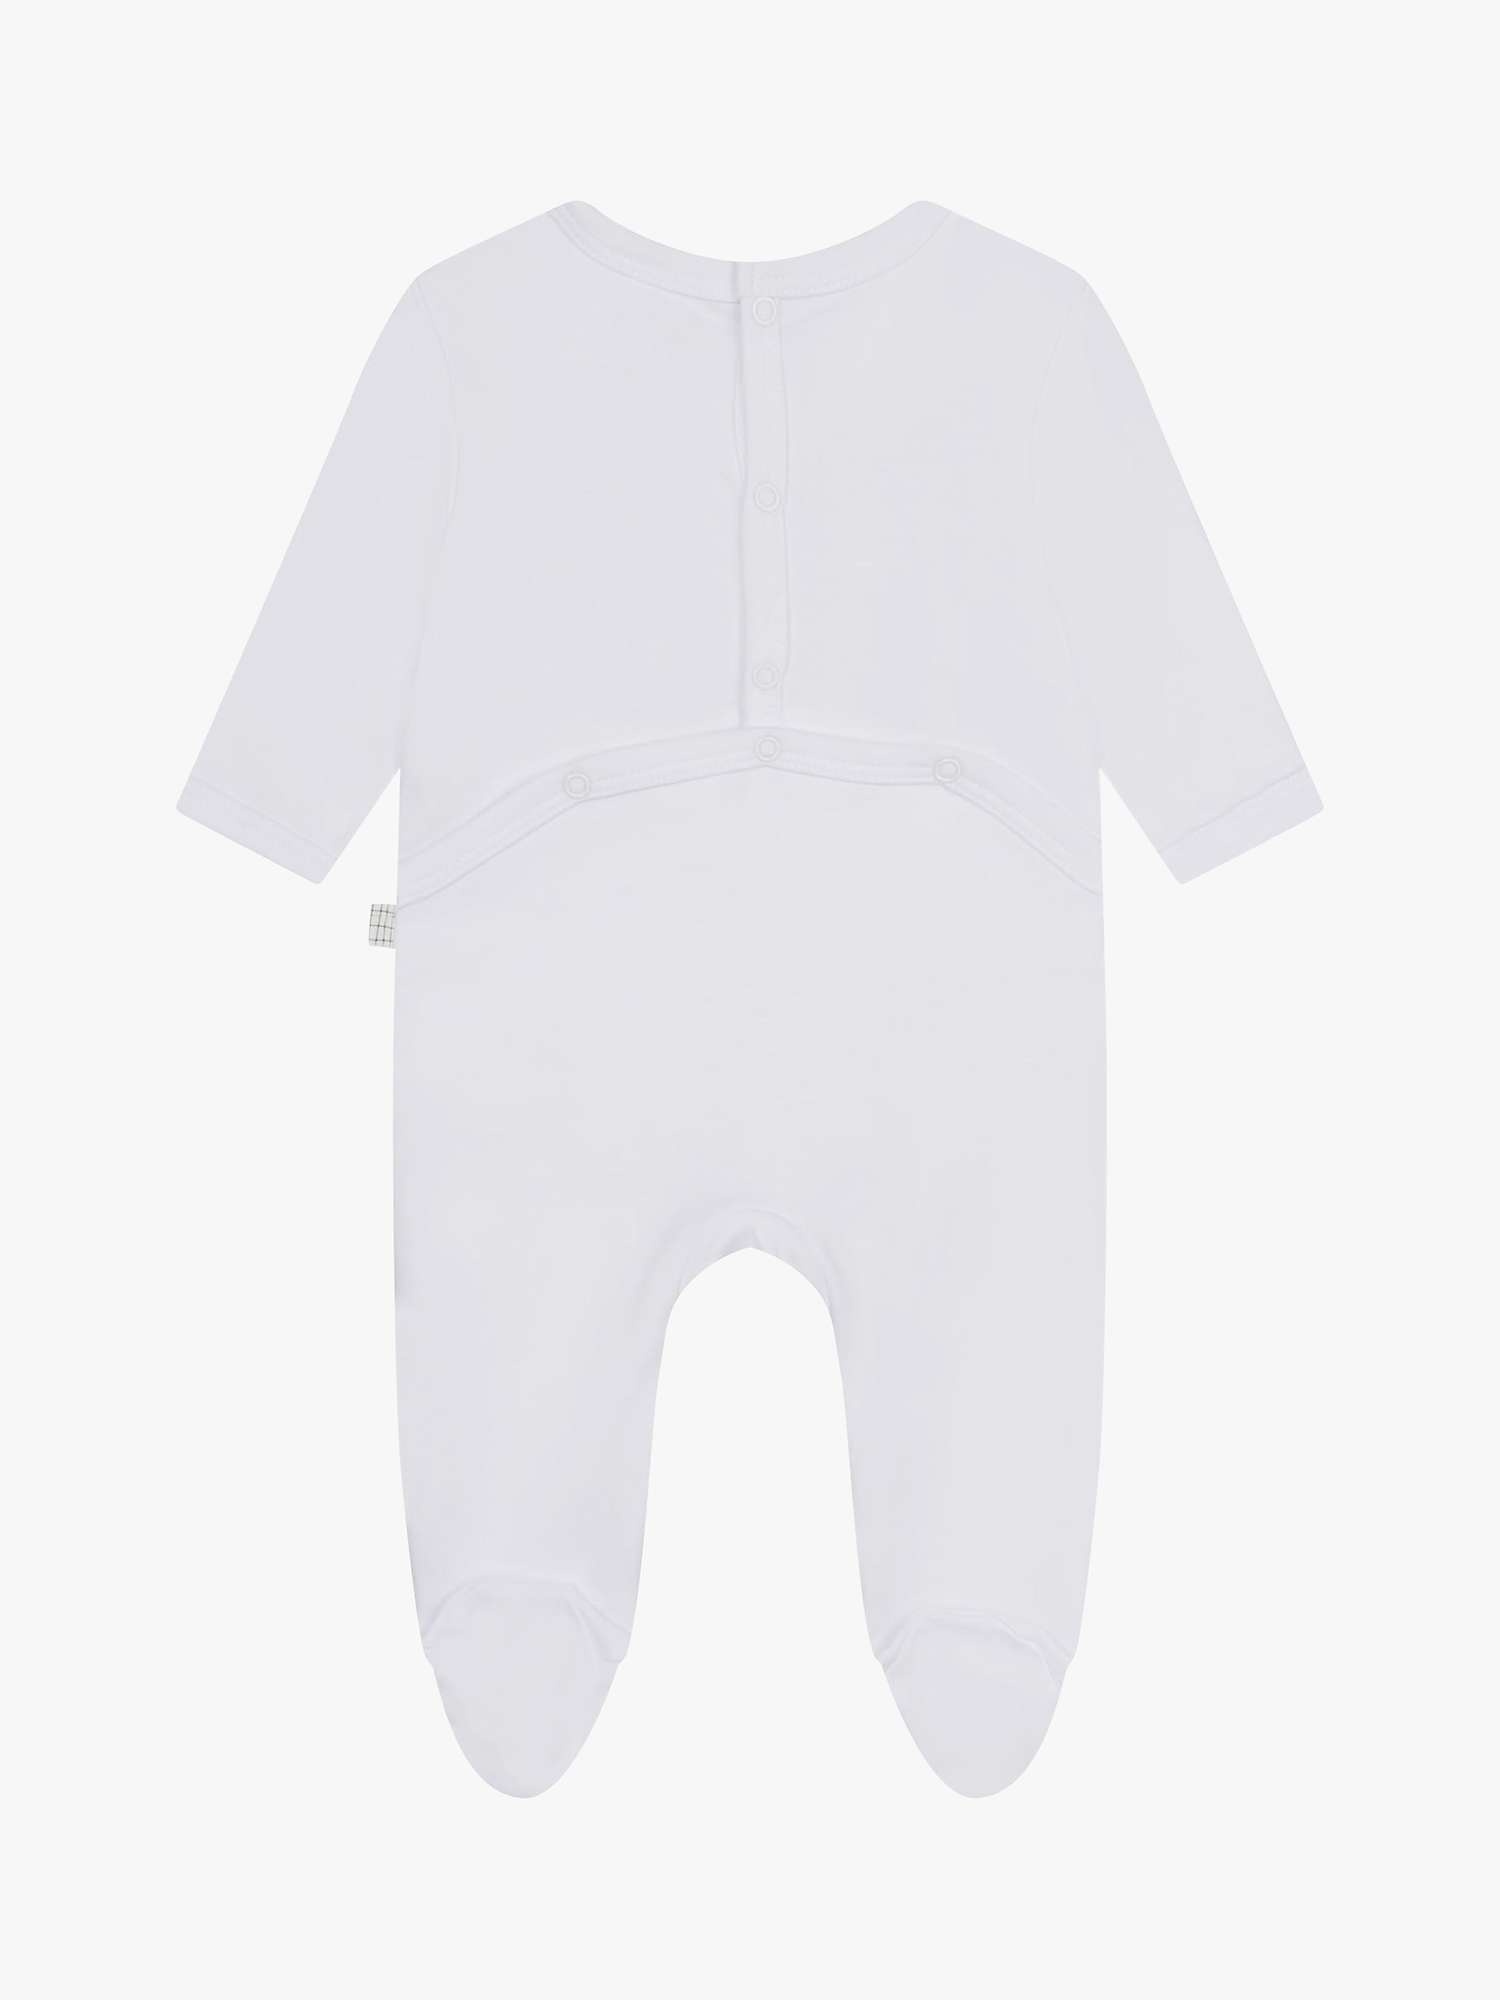 Carrément Beau Baby Pyjamas, White/Multi at John Lewis & Partners